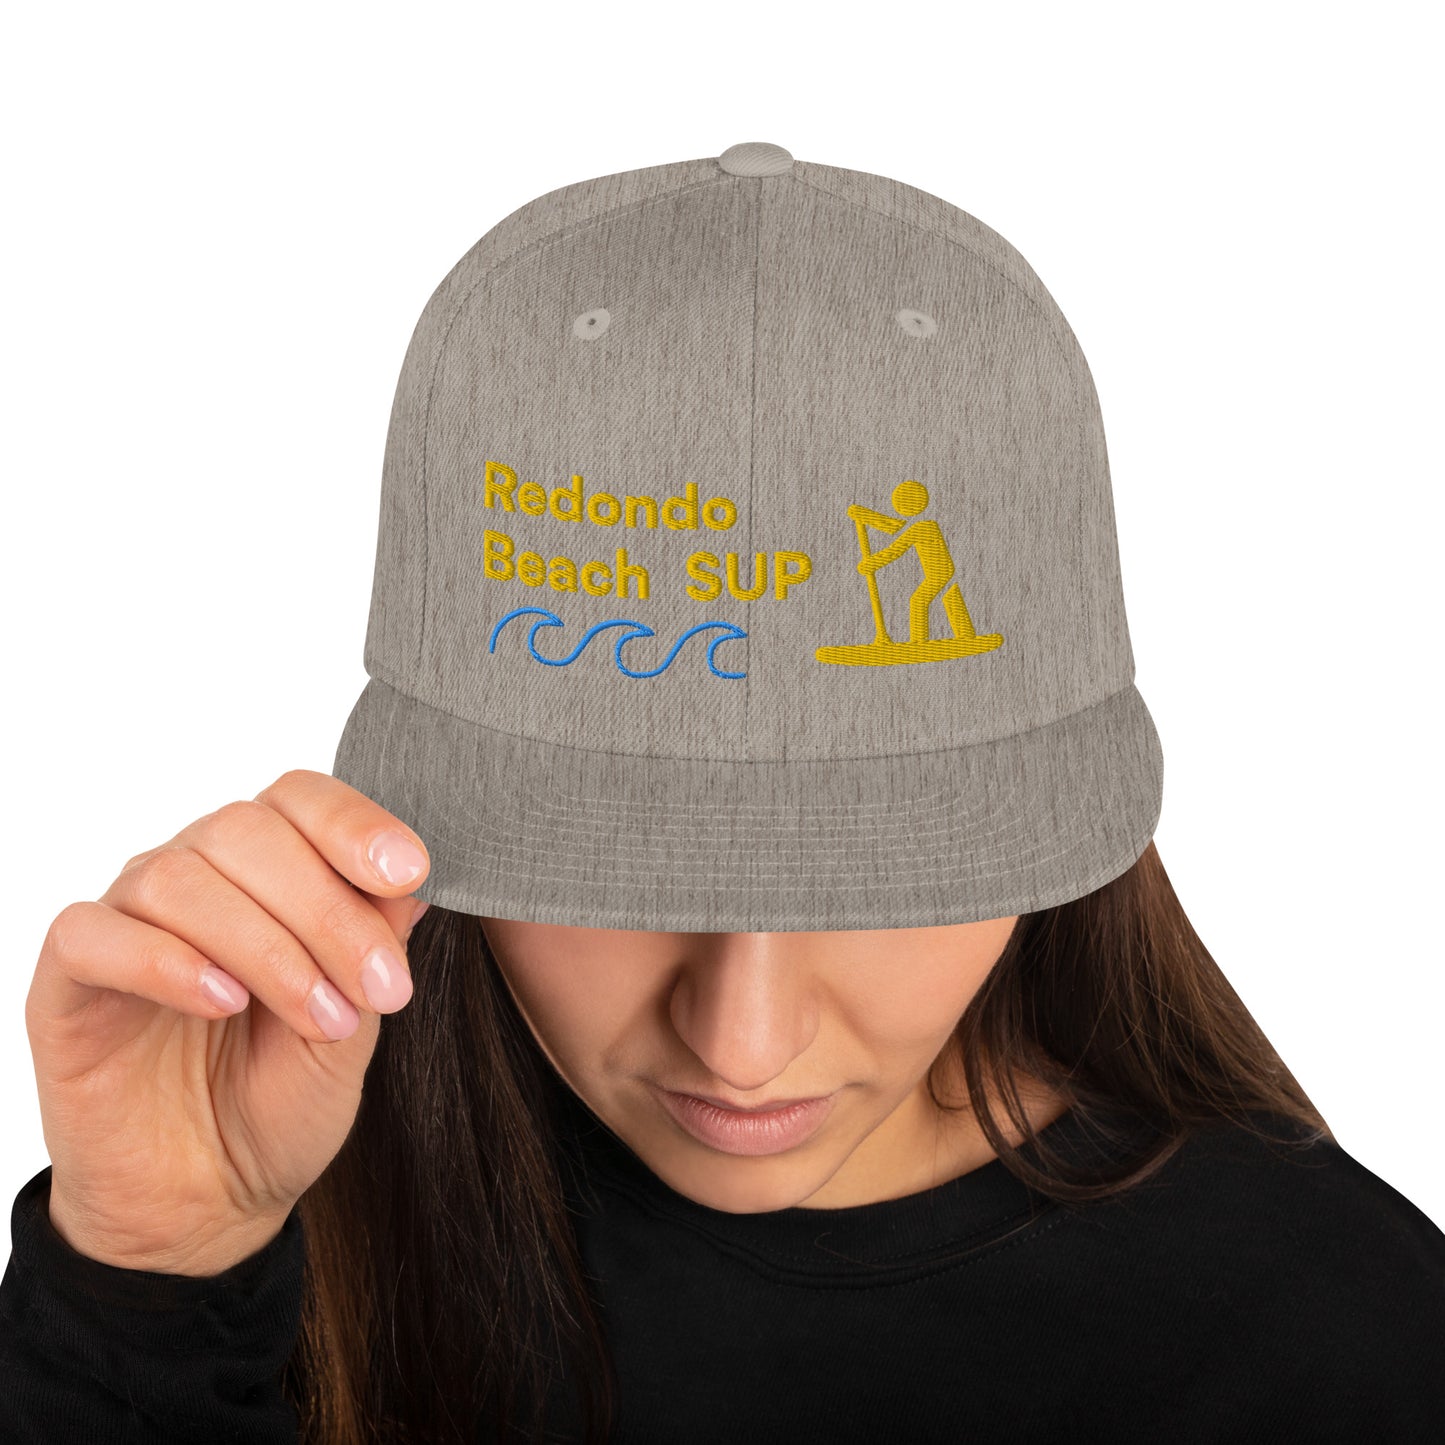 Redondo Beach - California - South Bay - Snapback Hat - SUP Style